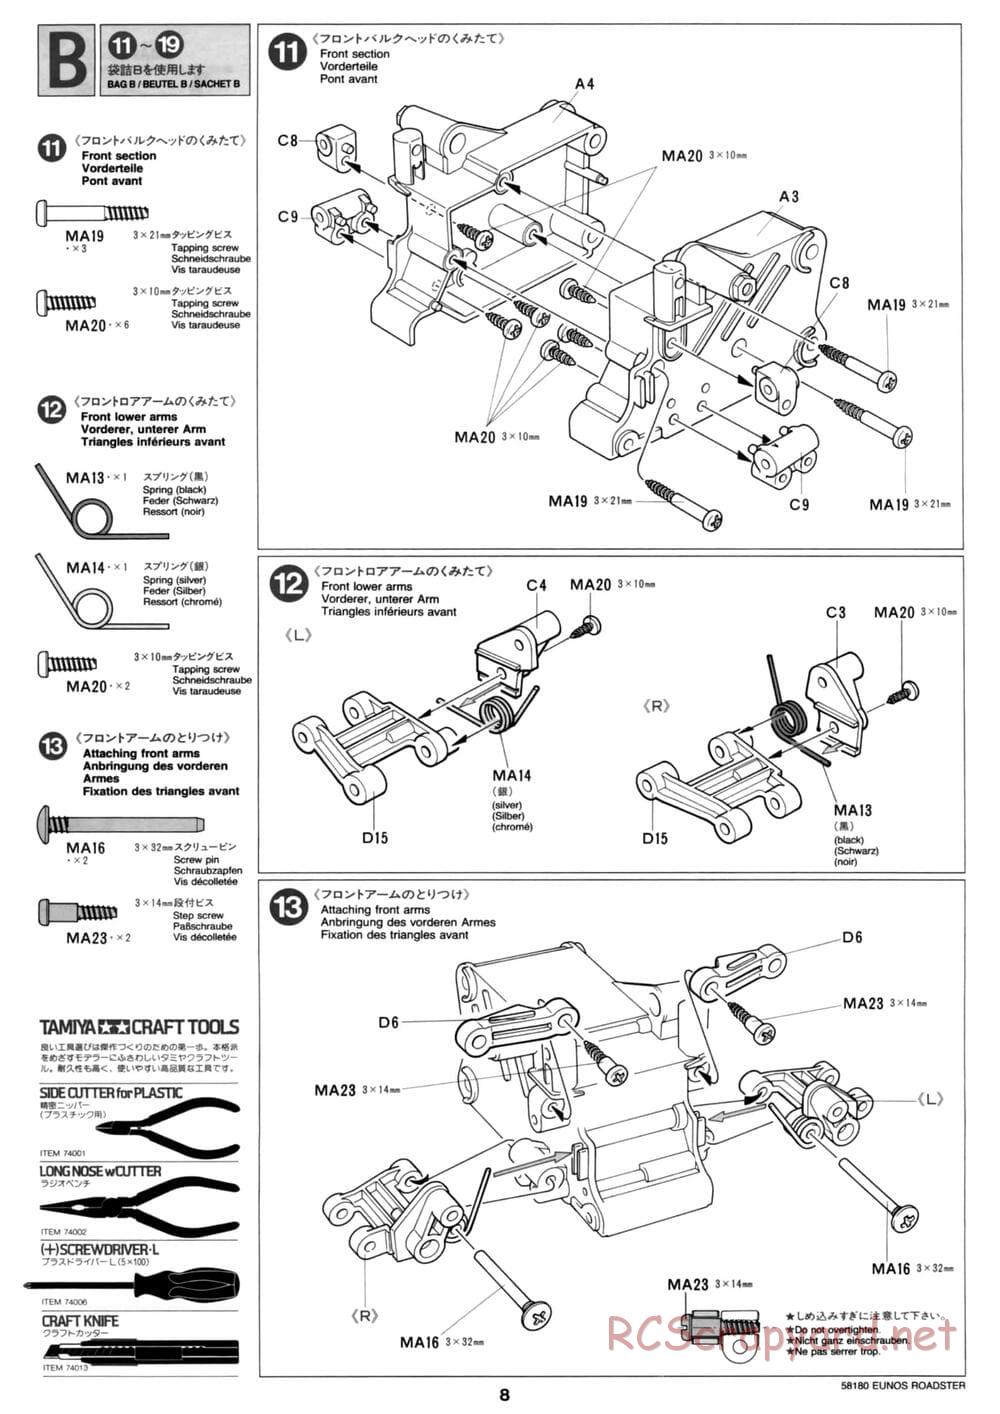 Tamiya - Eunos Roadster - M02M Chassis - Manual - Page 8